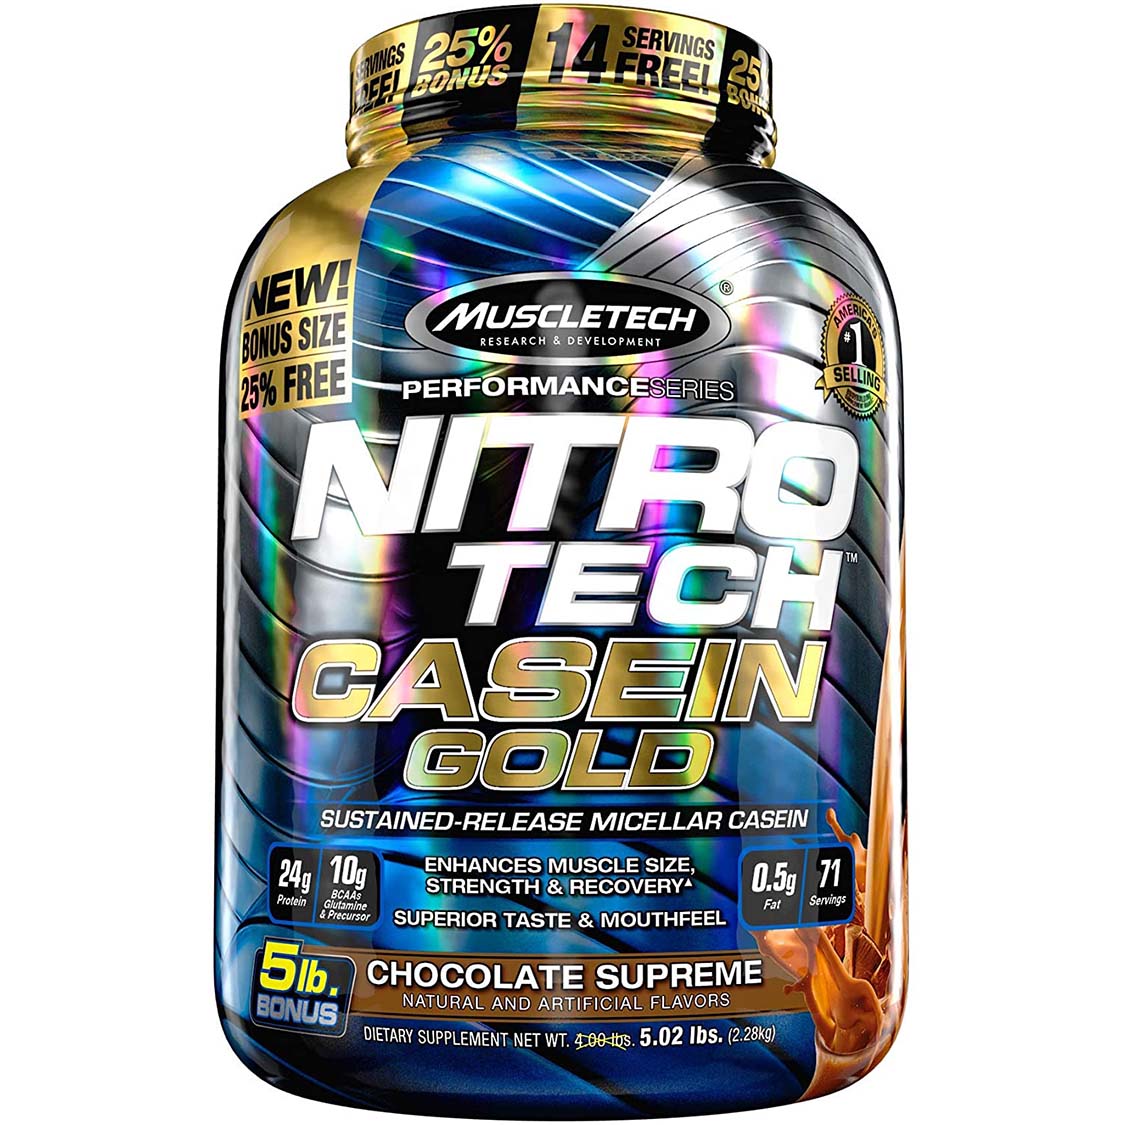 Muscletech Nitro Tech Casein Gold 5 LB Chocolate Supreme